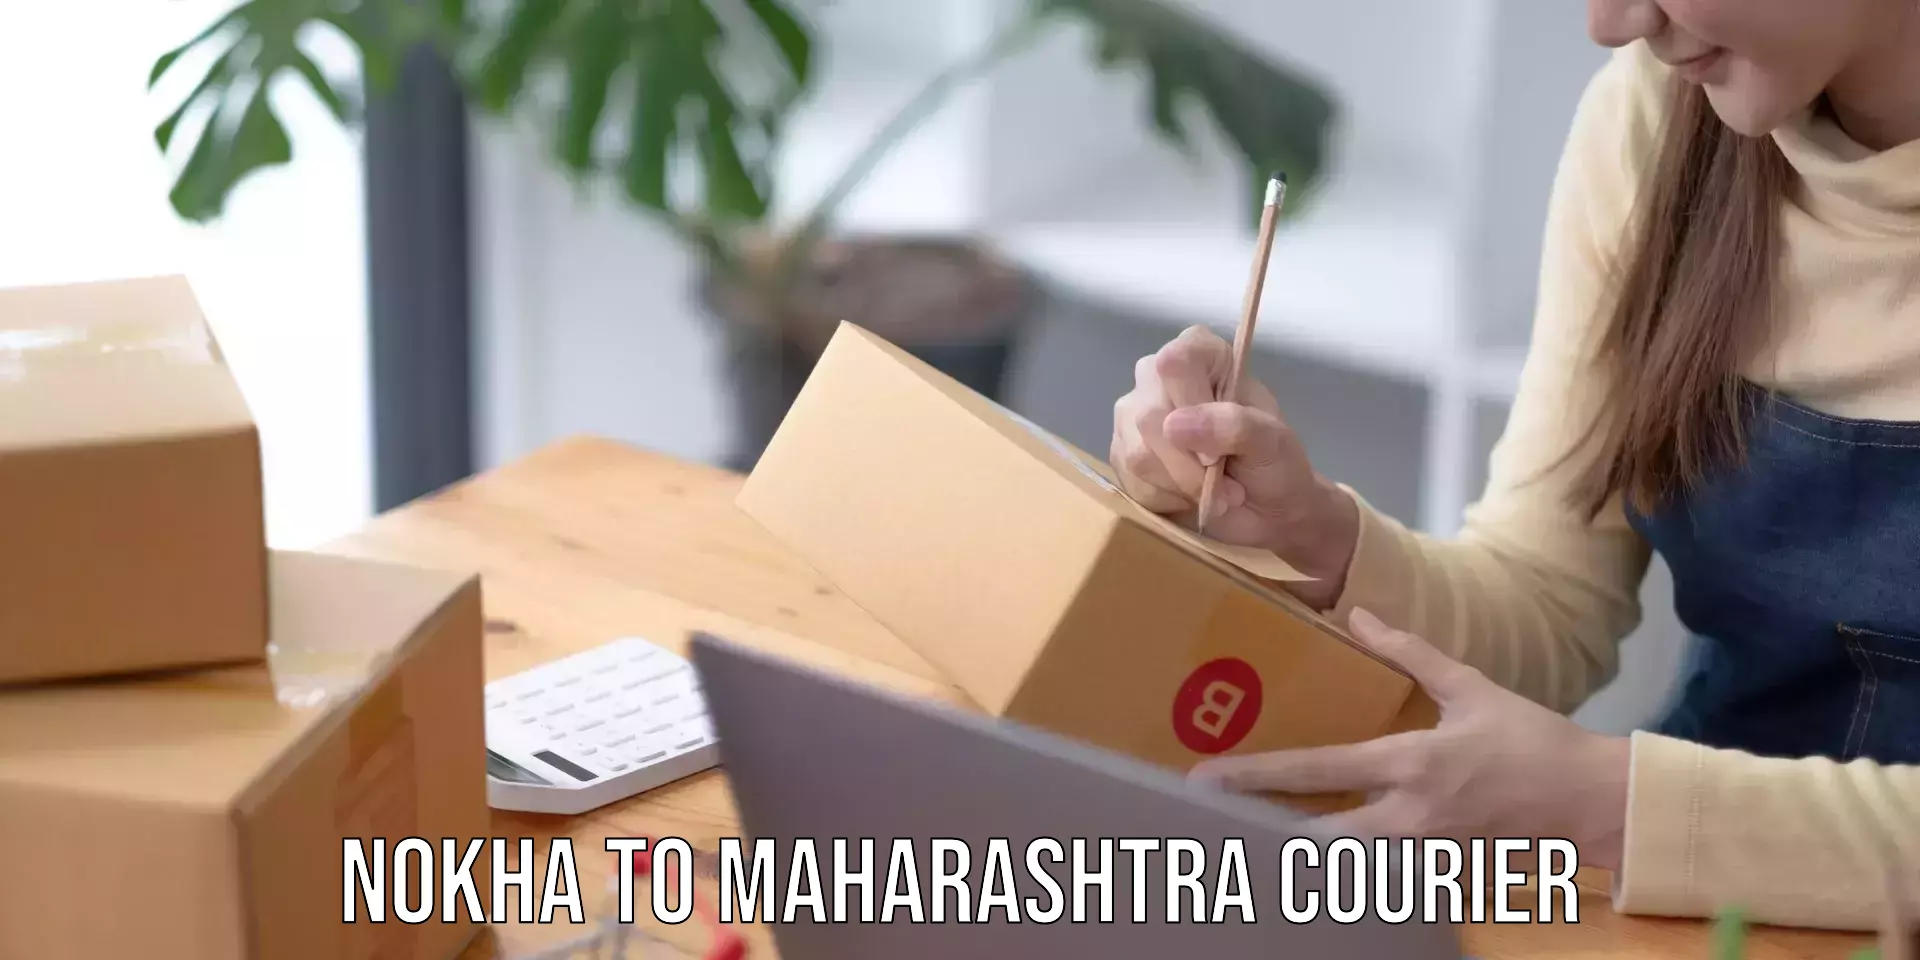 International courier networks Nokha to Maharashtra